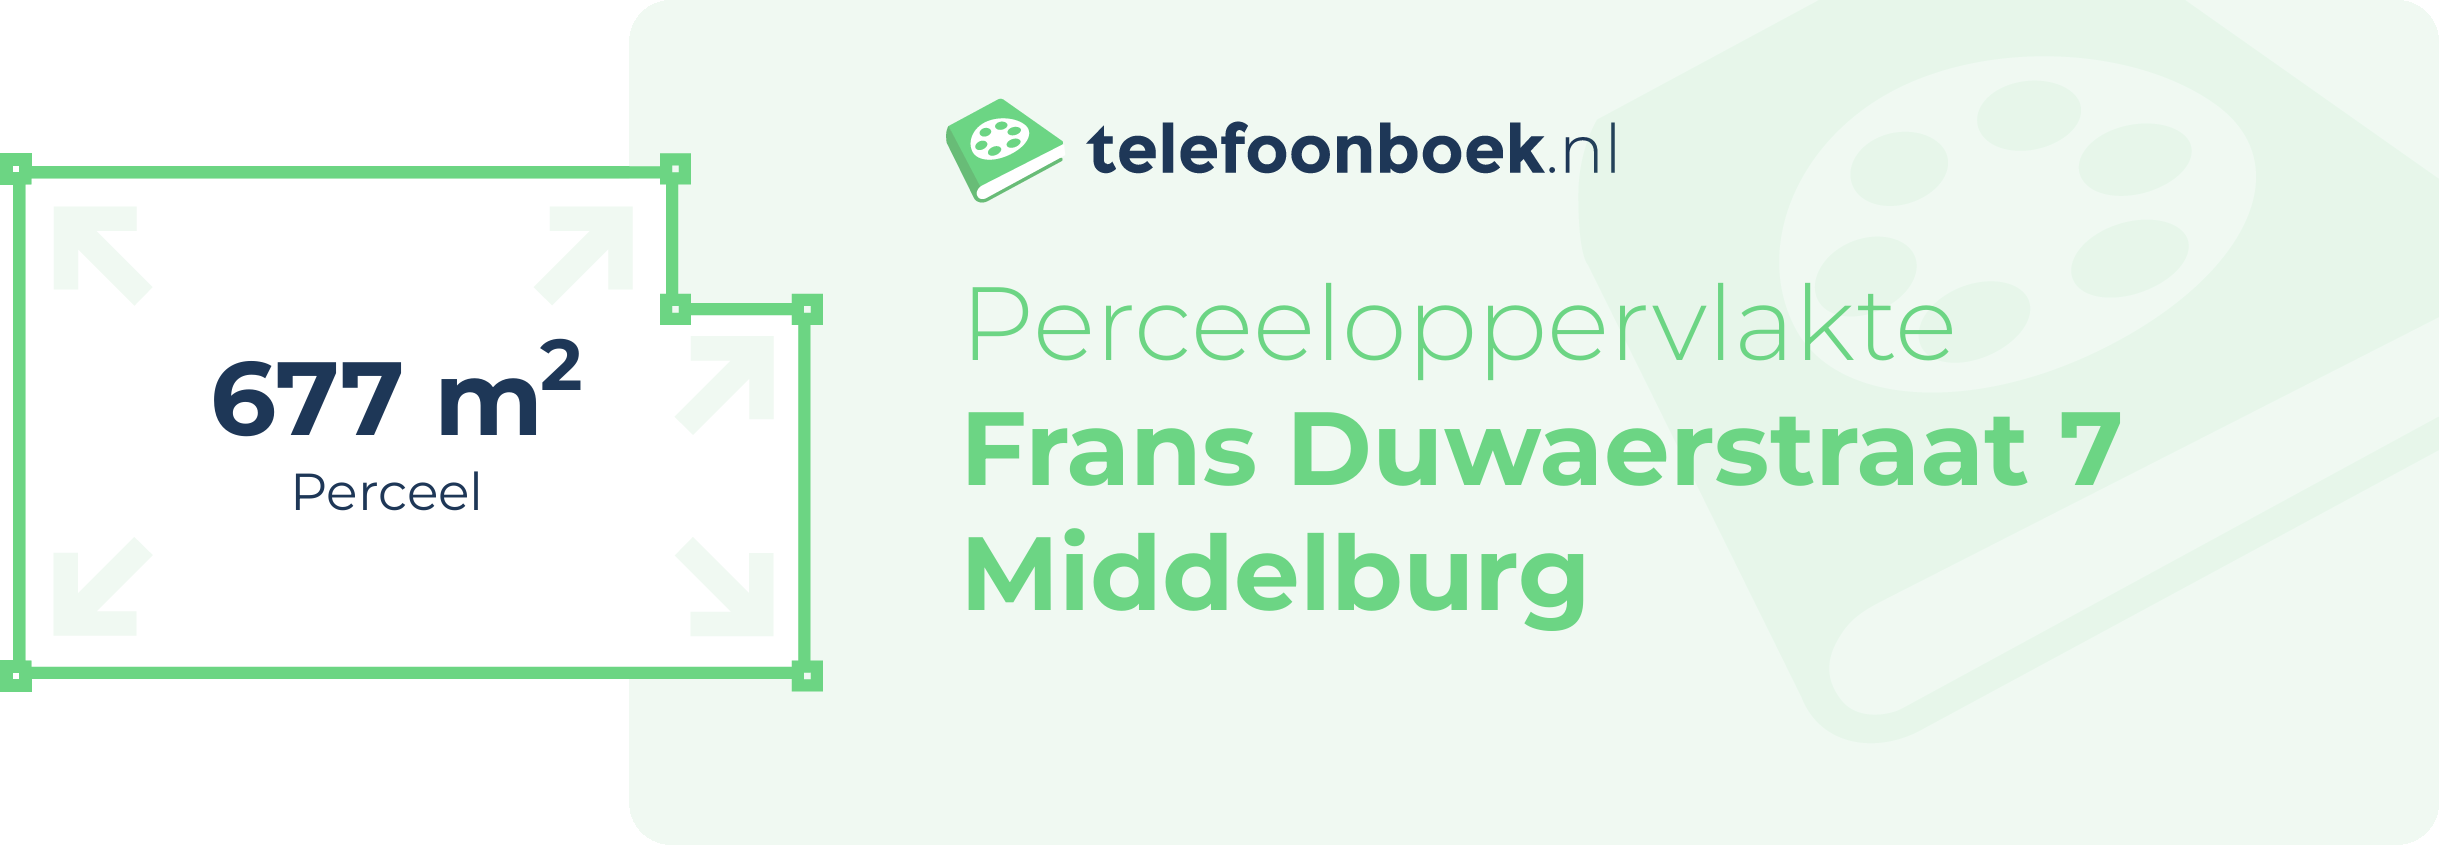 Perceeloppervlakte Frans Duwaerstraat 7 Middelburg